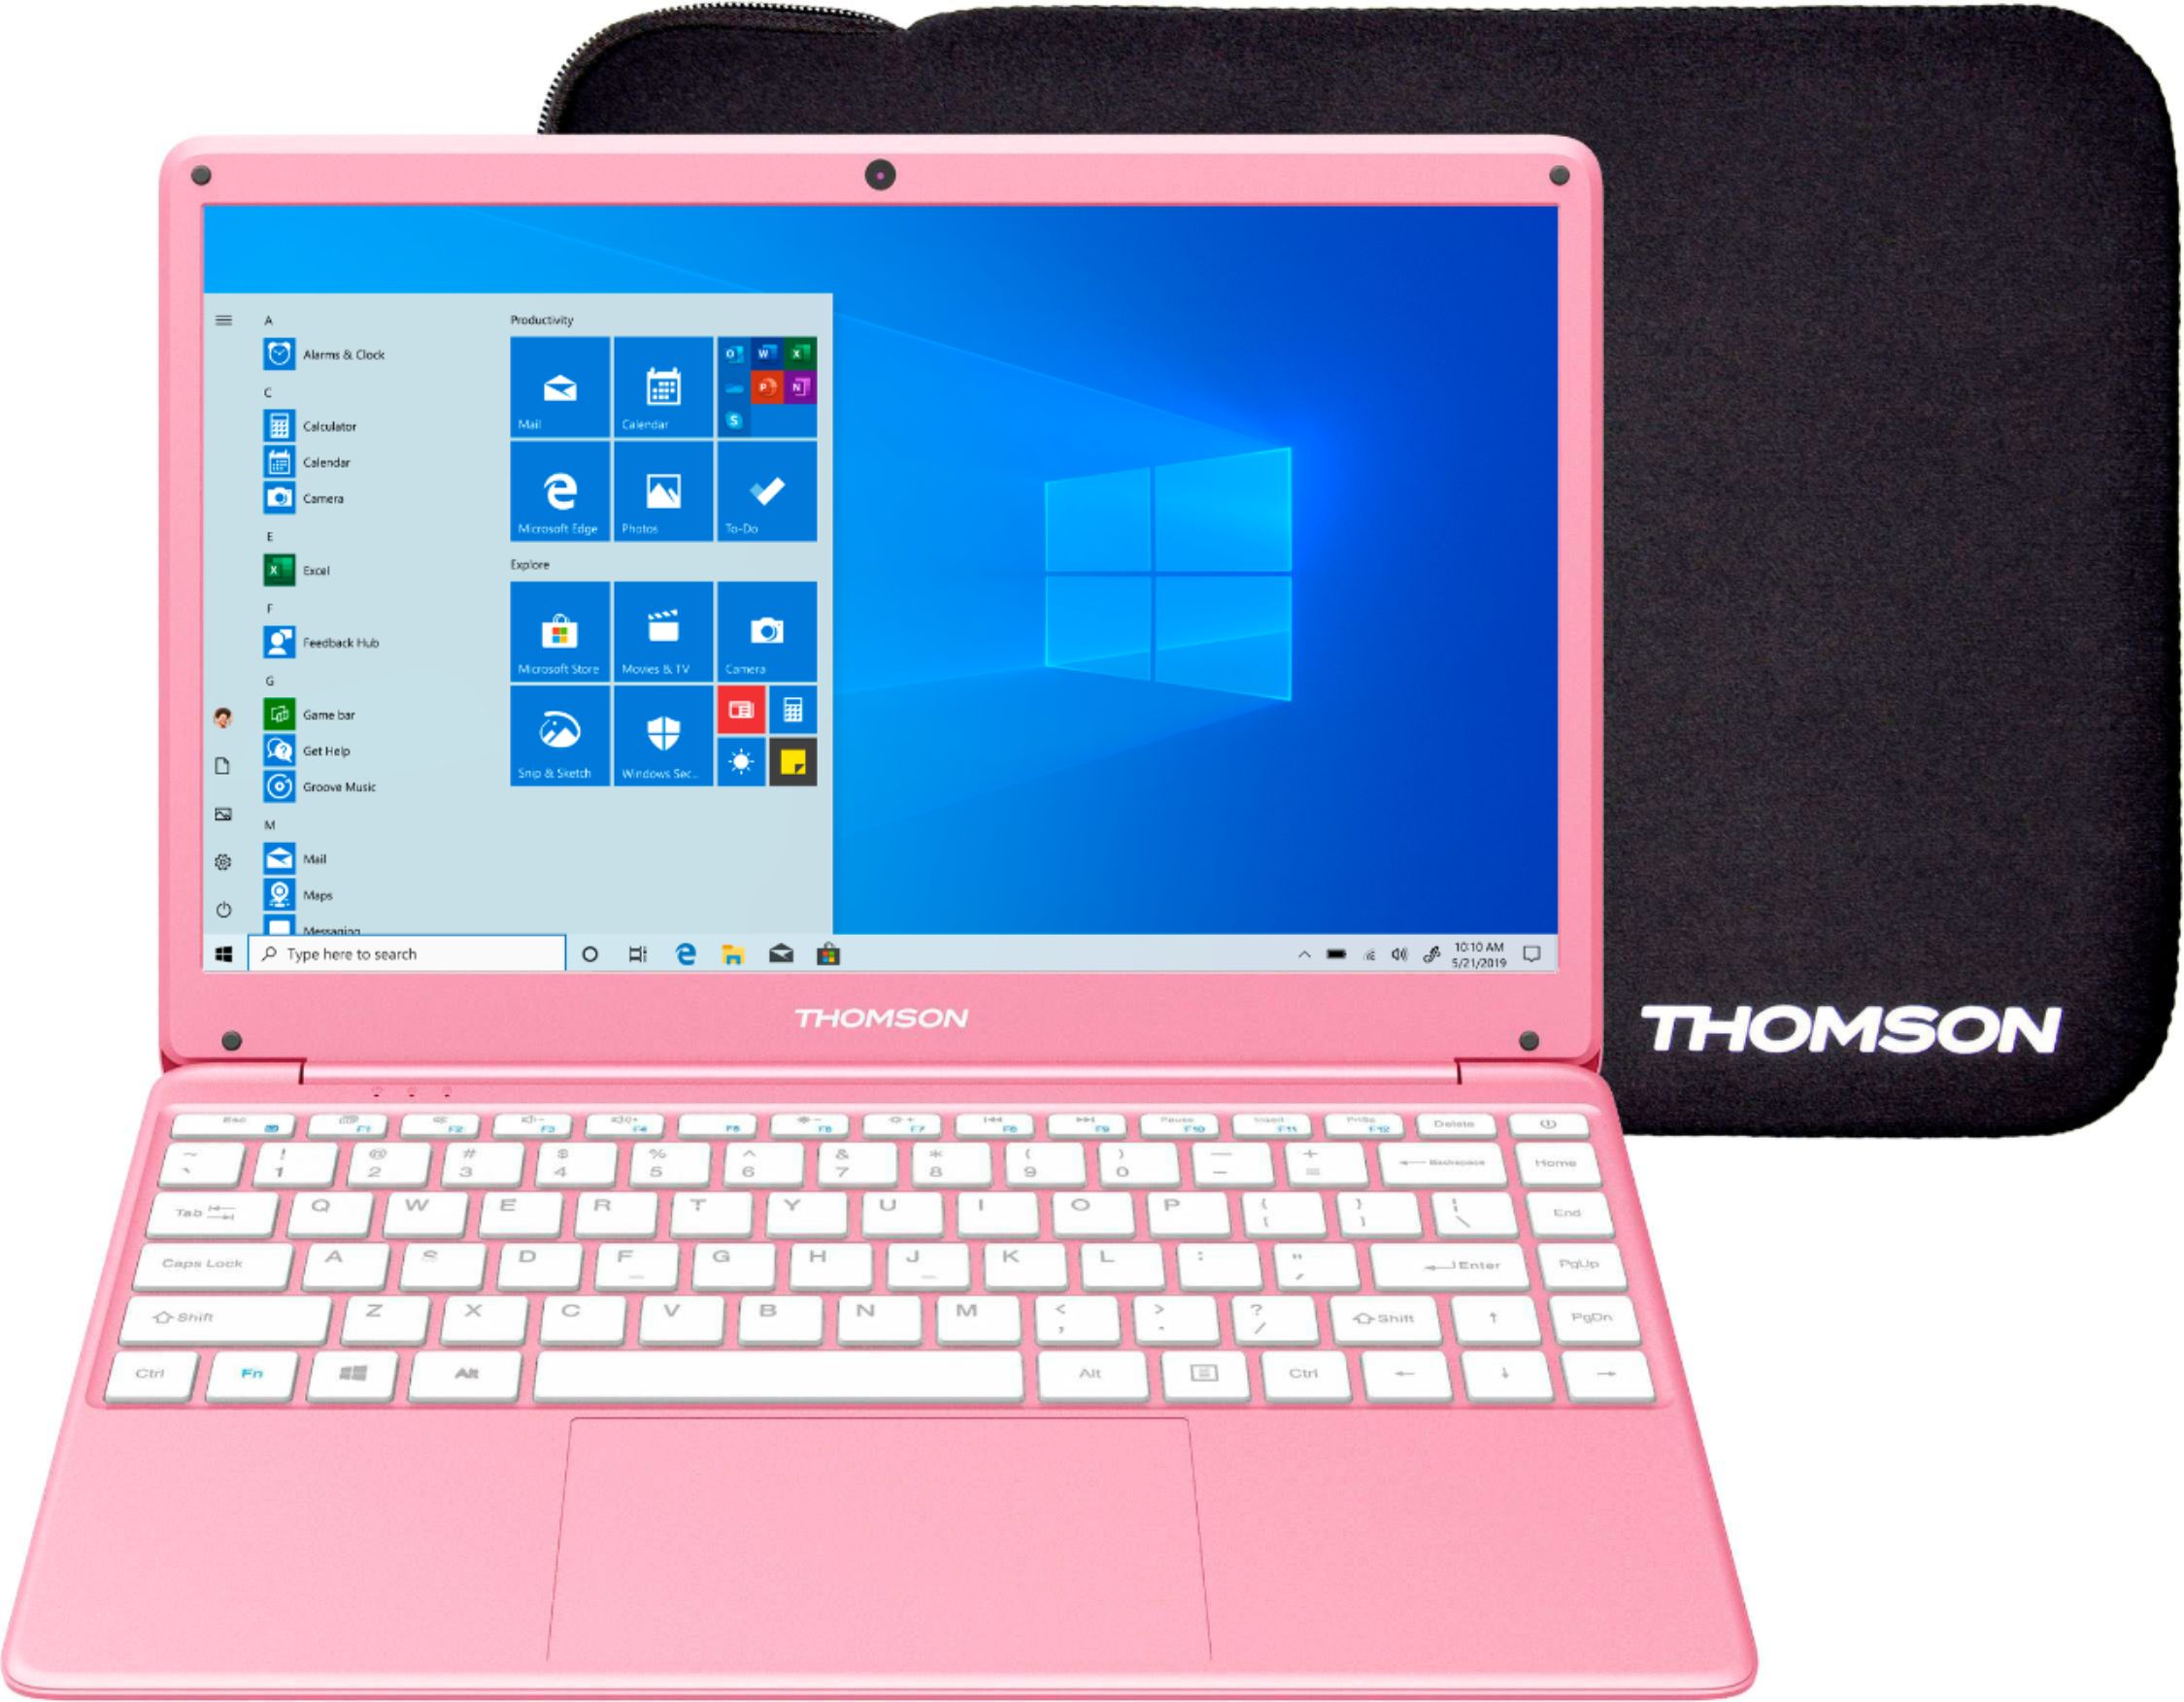 Thomson Laptop NEO14,14.1 Inch, Intel Atom, 4Gb RAM, 64Gb eMMC Storage,  Windows 10 - White REFURBISHED Like New